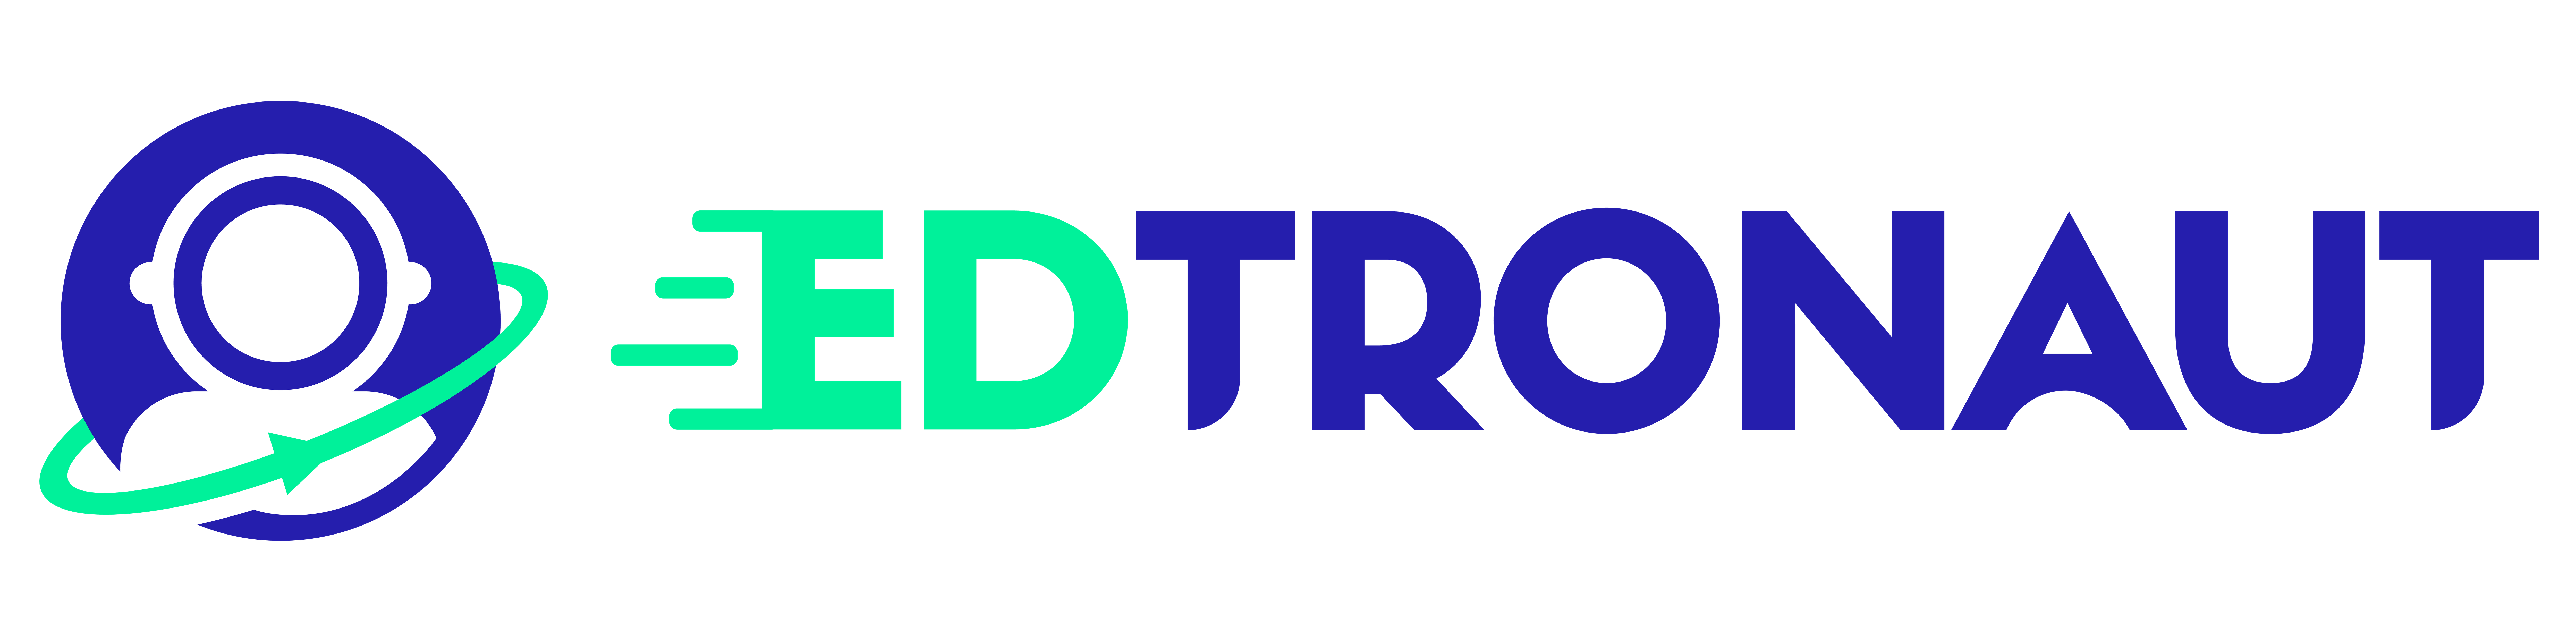 edtronaut-logo